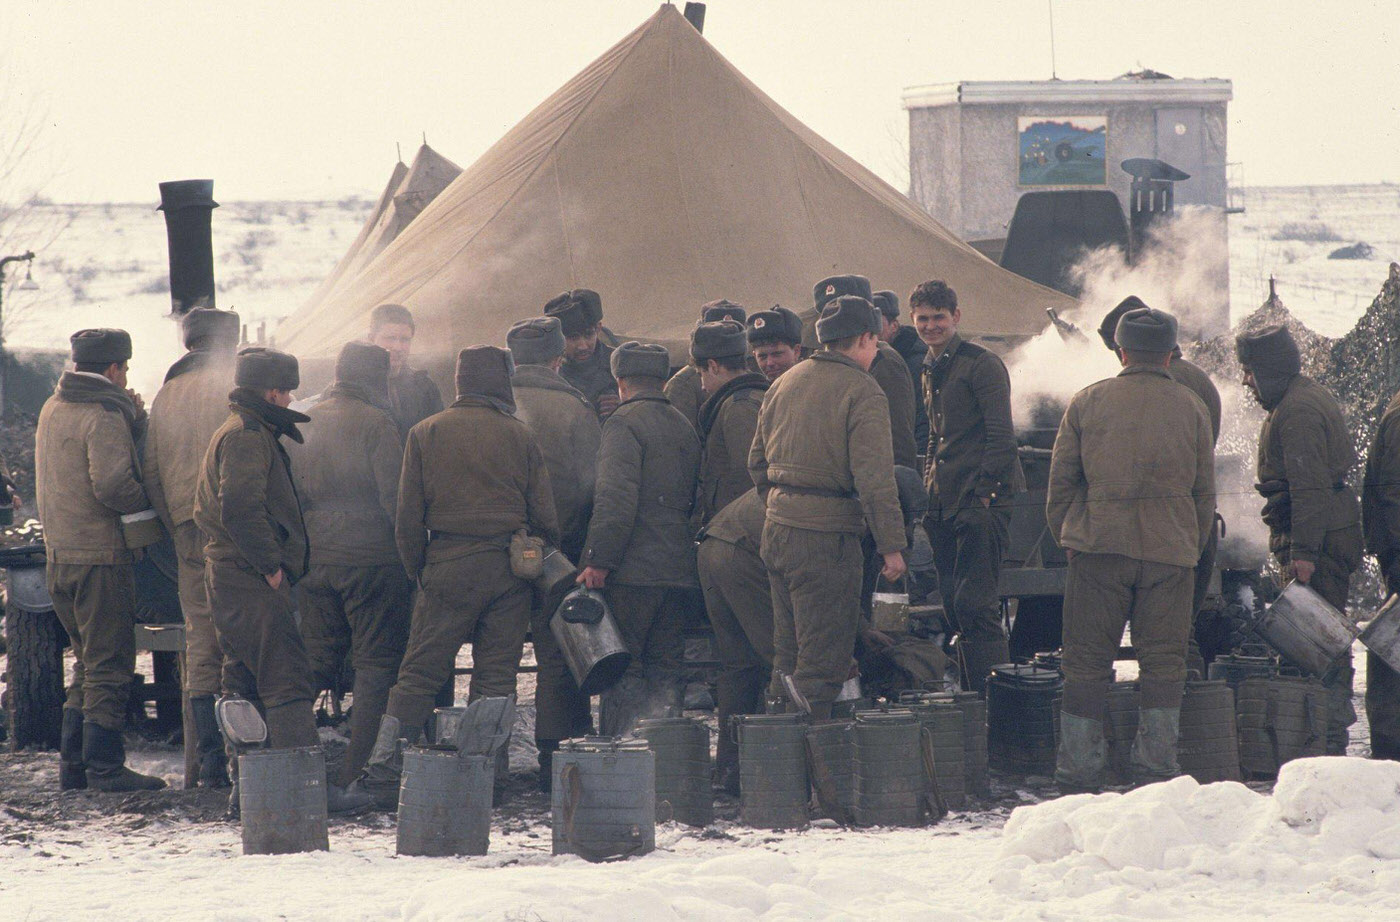 Ukraine Military Personnel, 1992